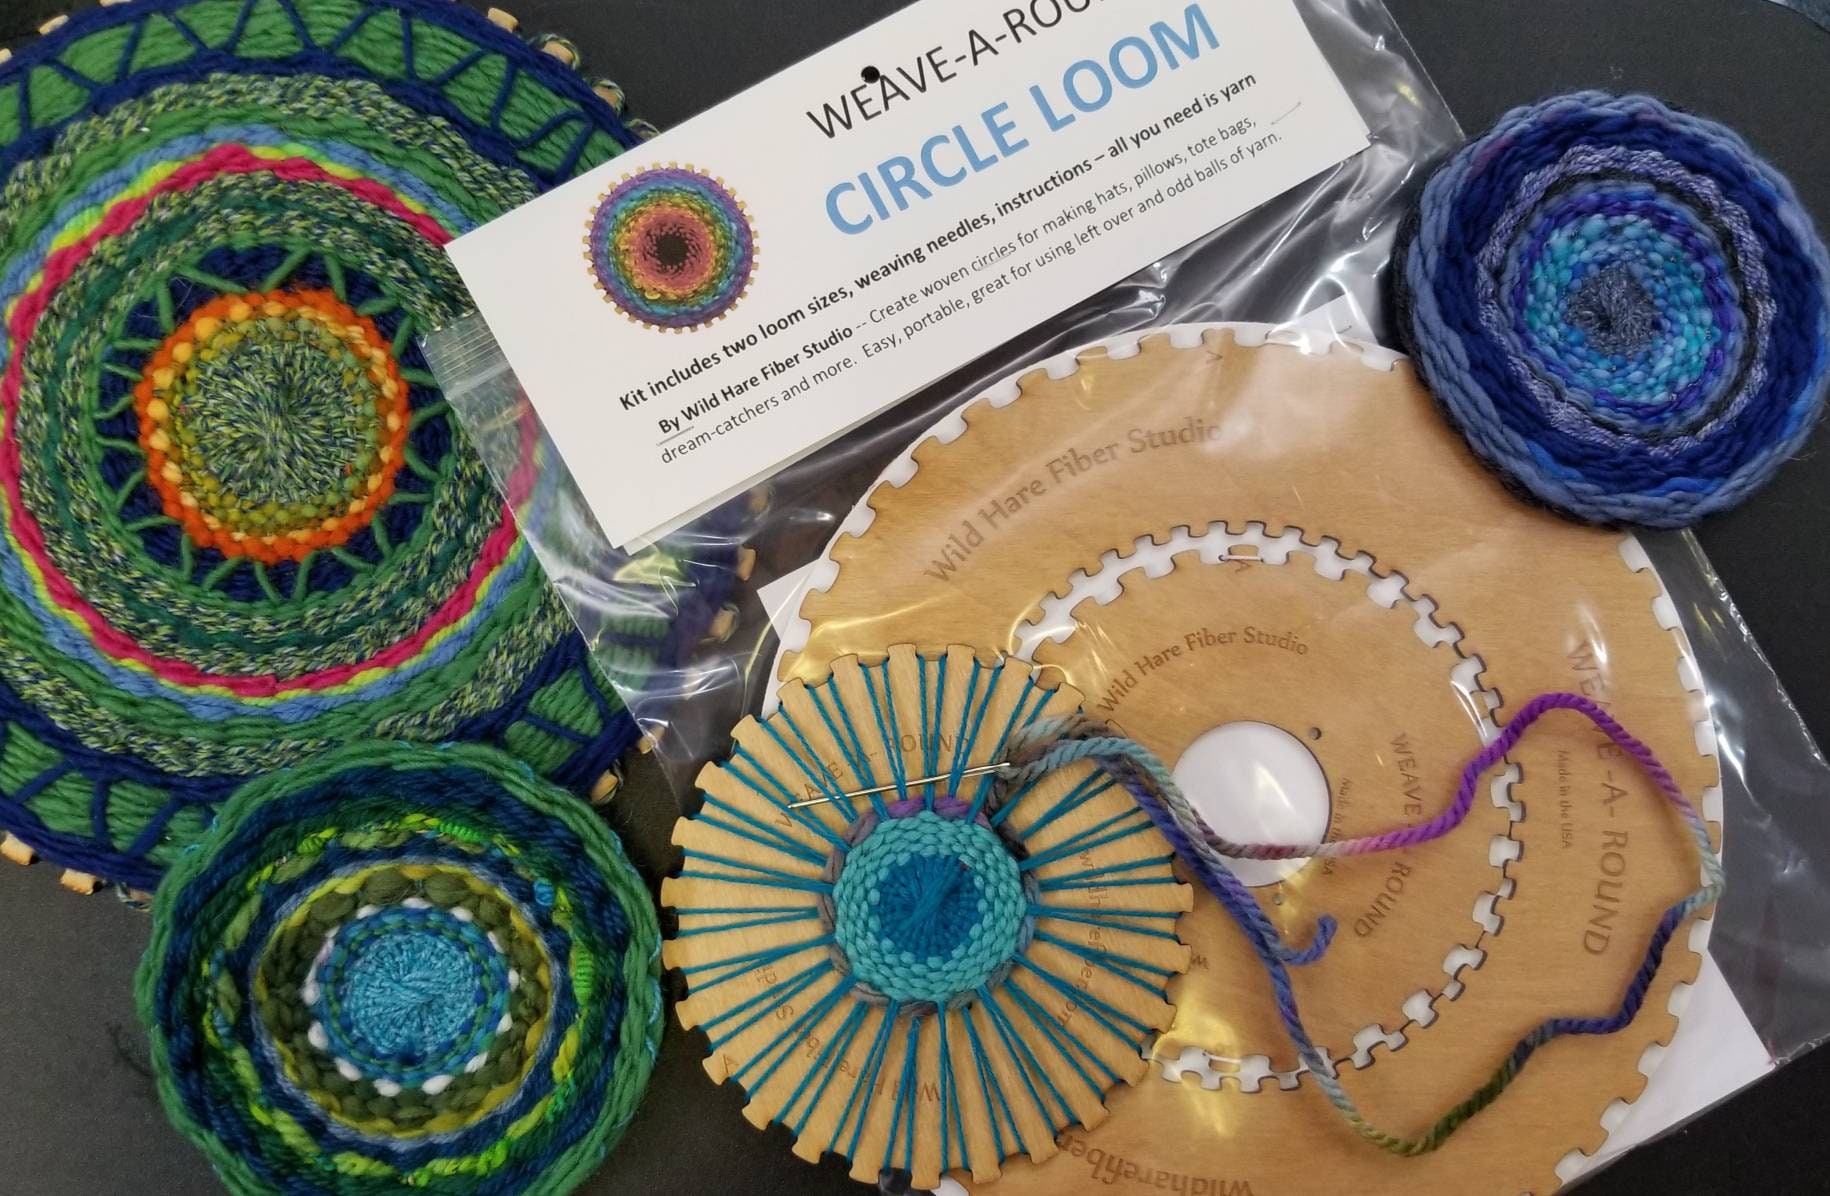 Creativity Street Bead Loom Kits Assorted Colors Pack Of 2 Kits